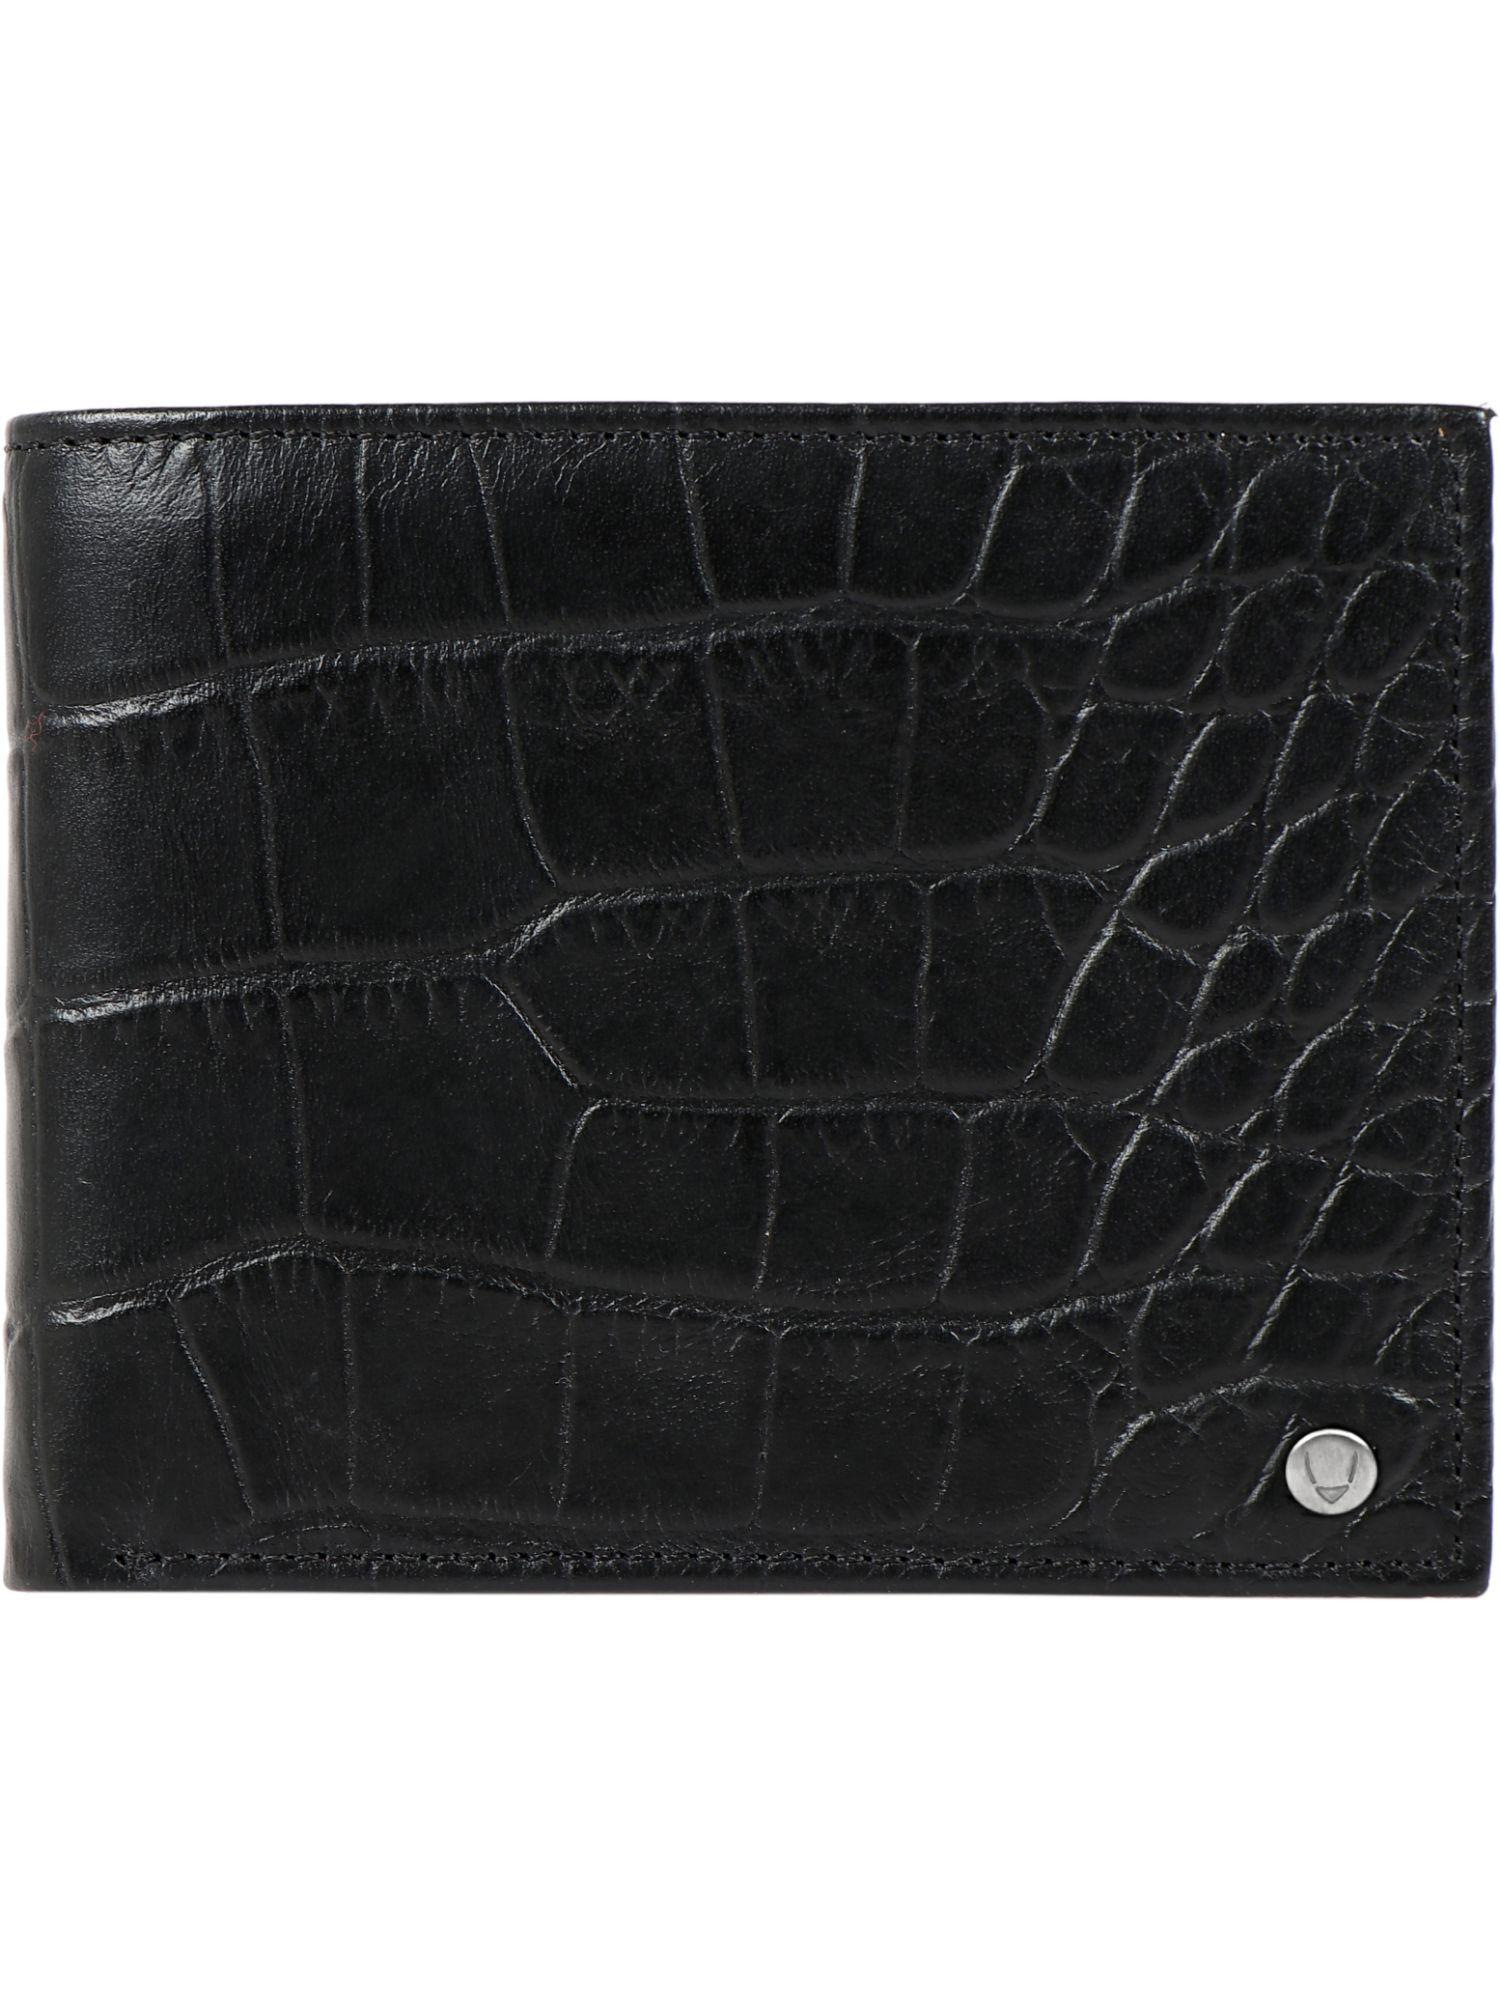 cro mel ran- black bi-fold wallet